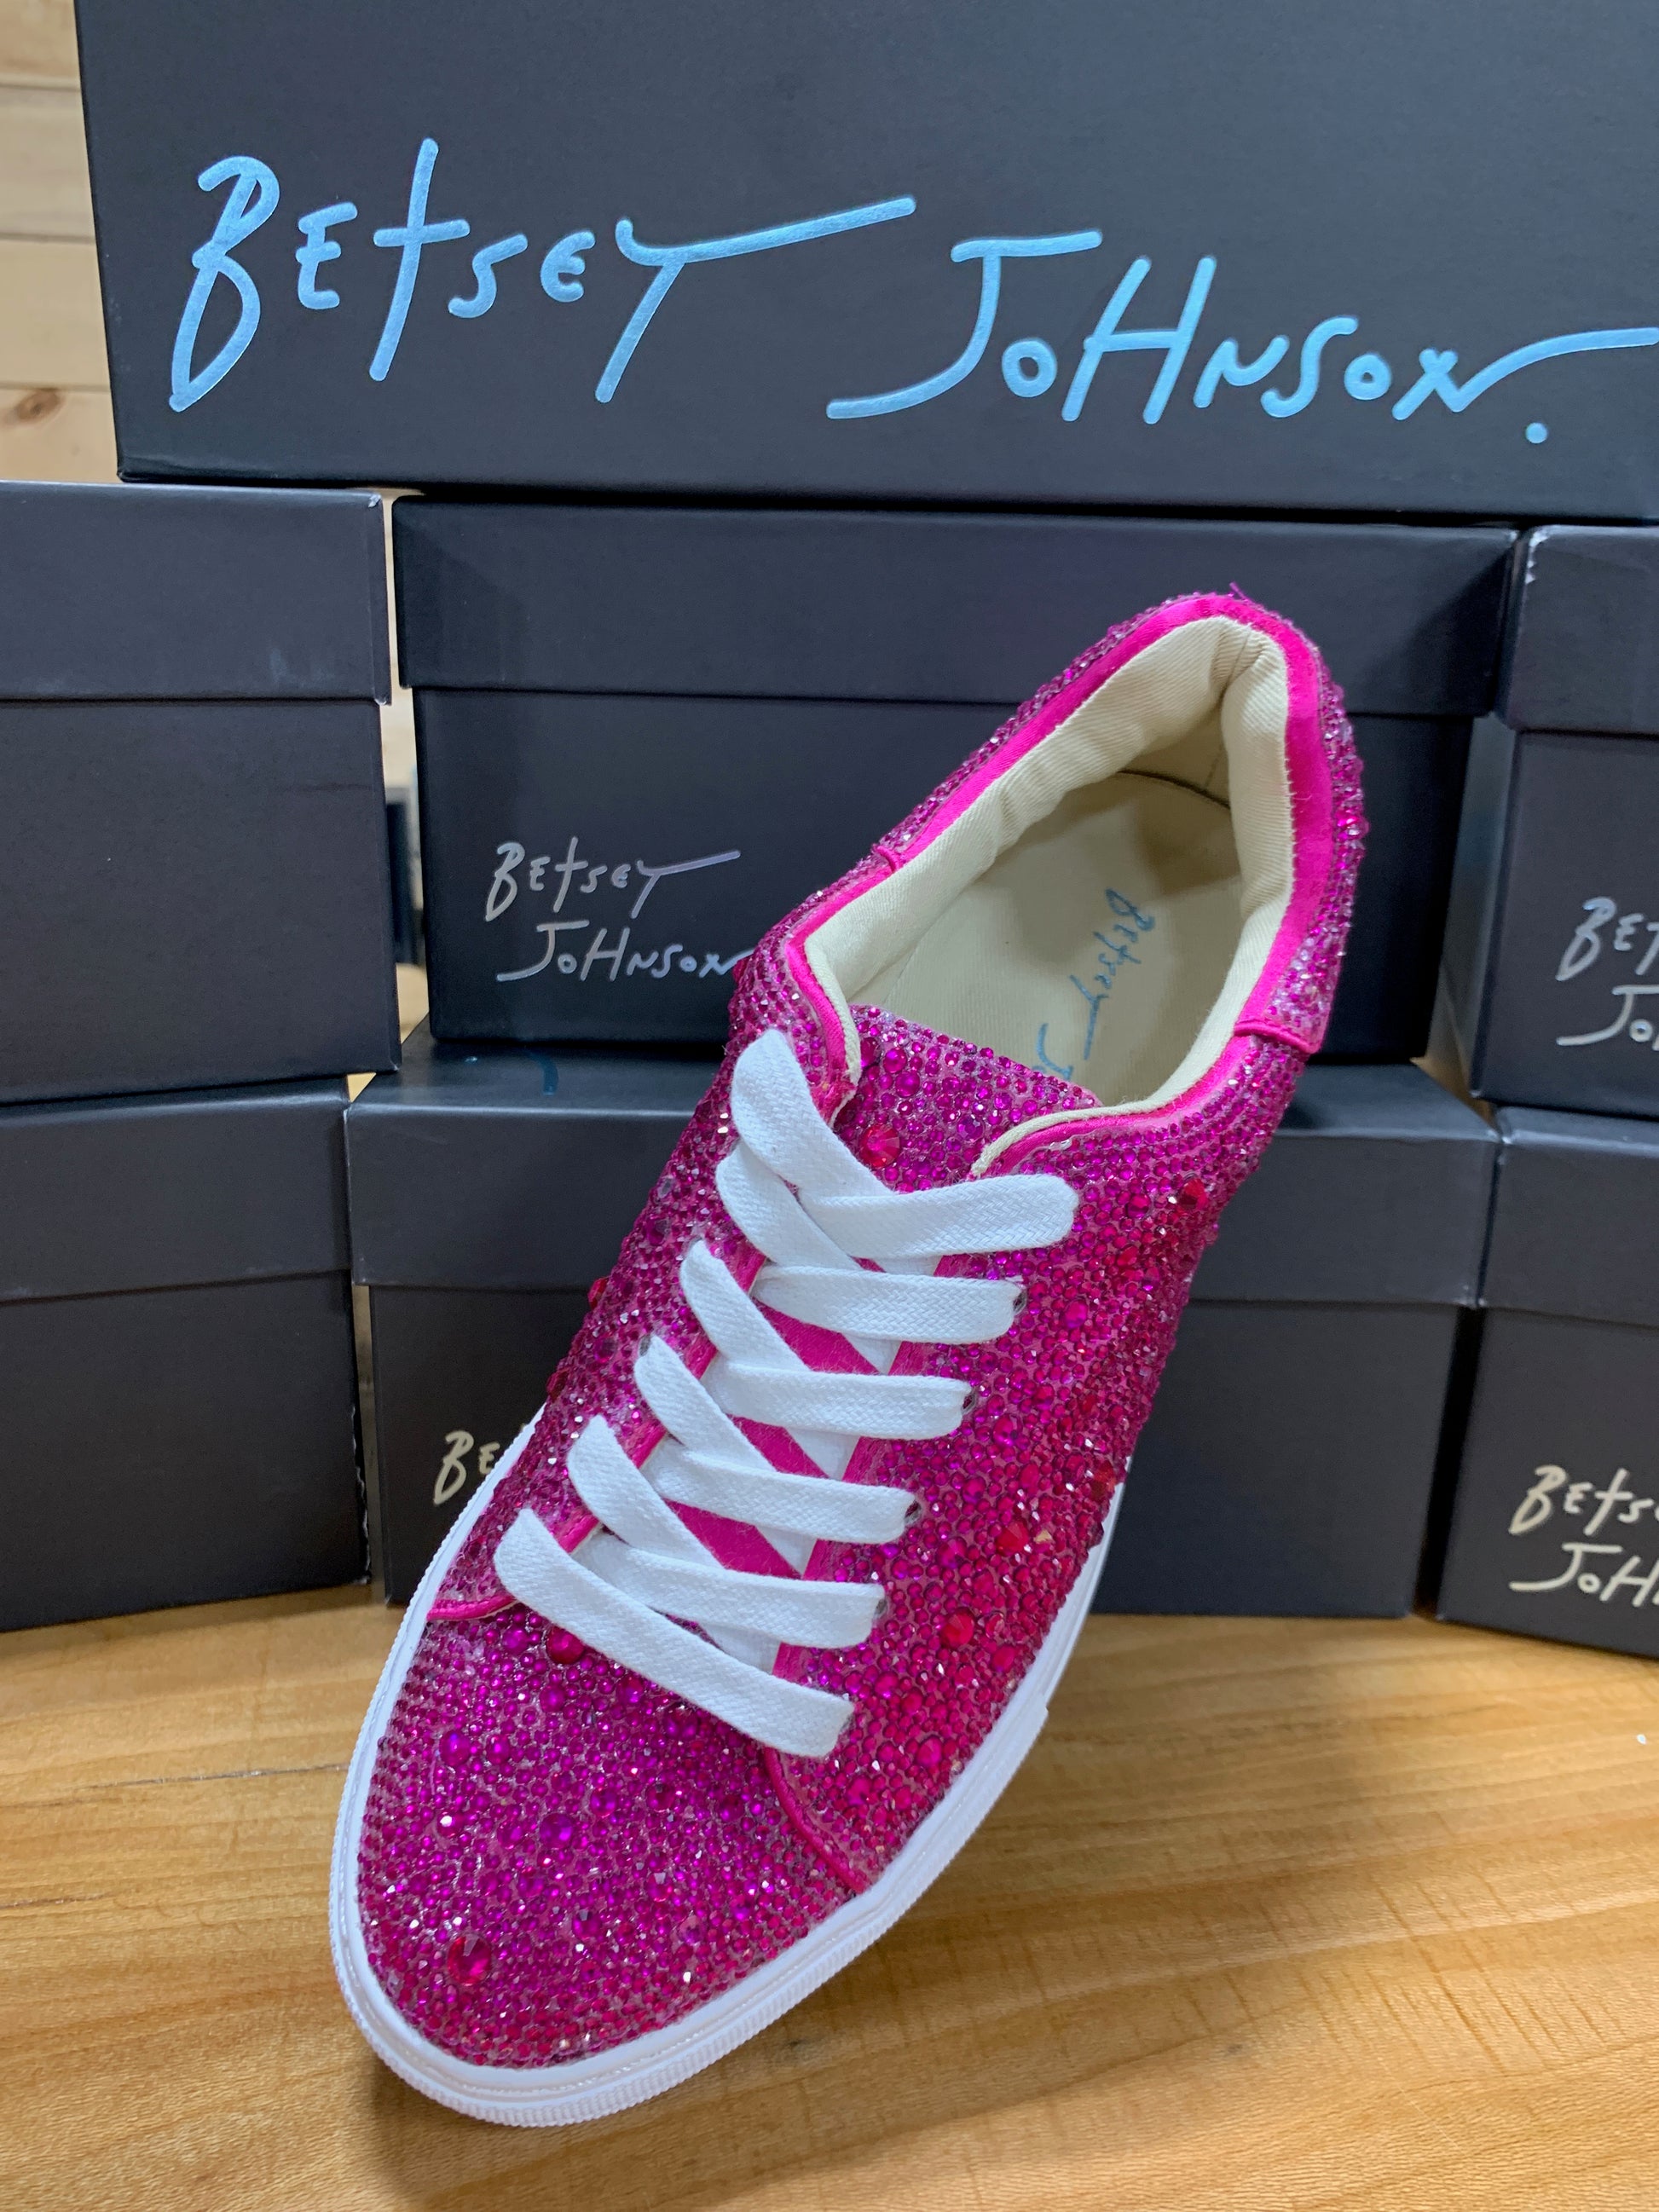 Betsey Johnson Sparkle Tennis Shoes